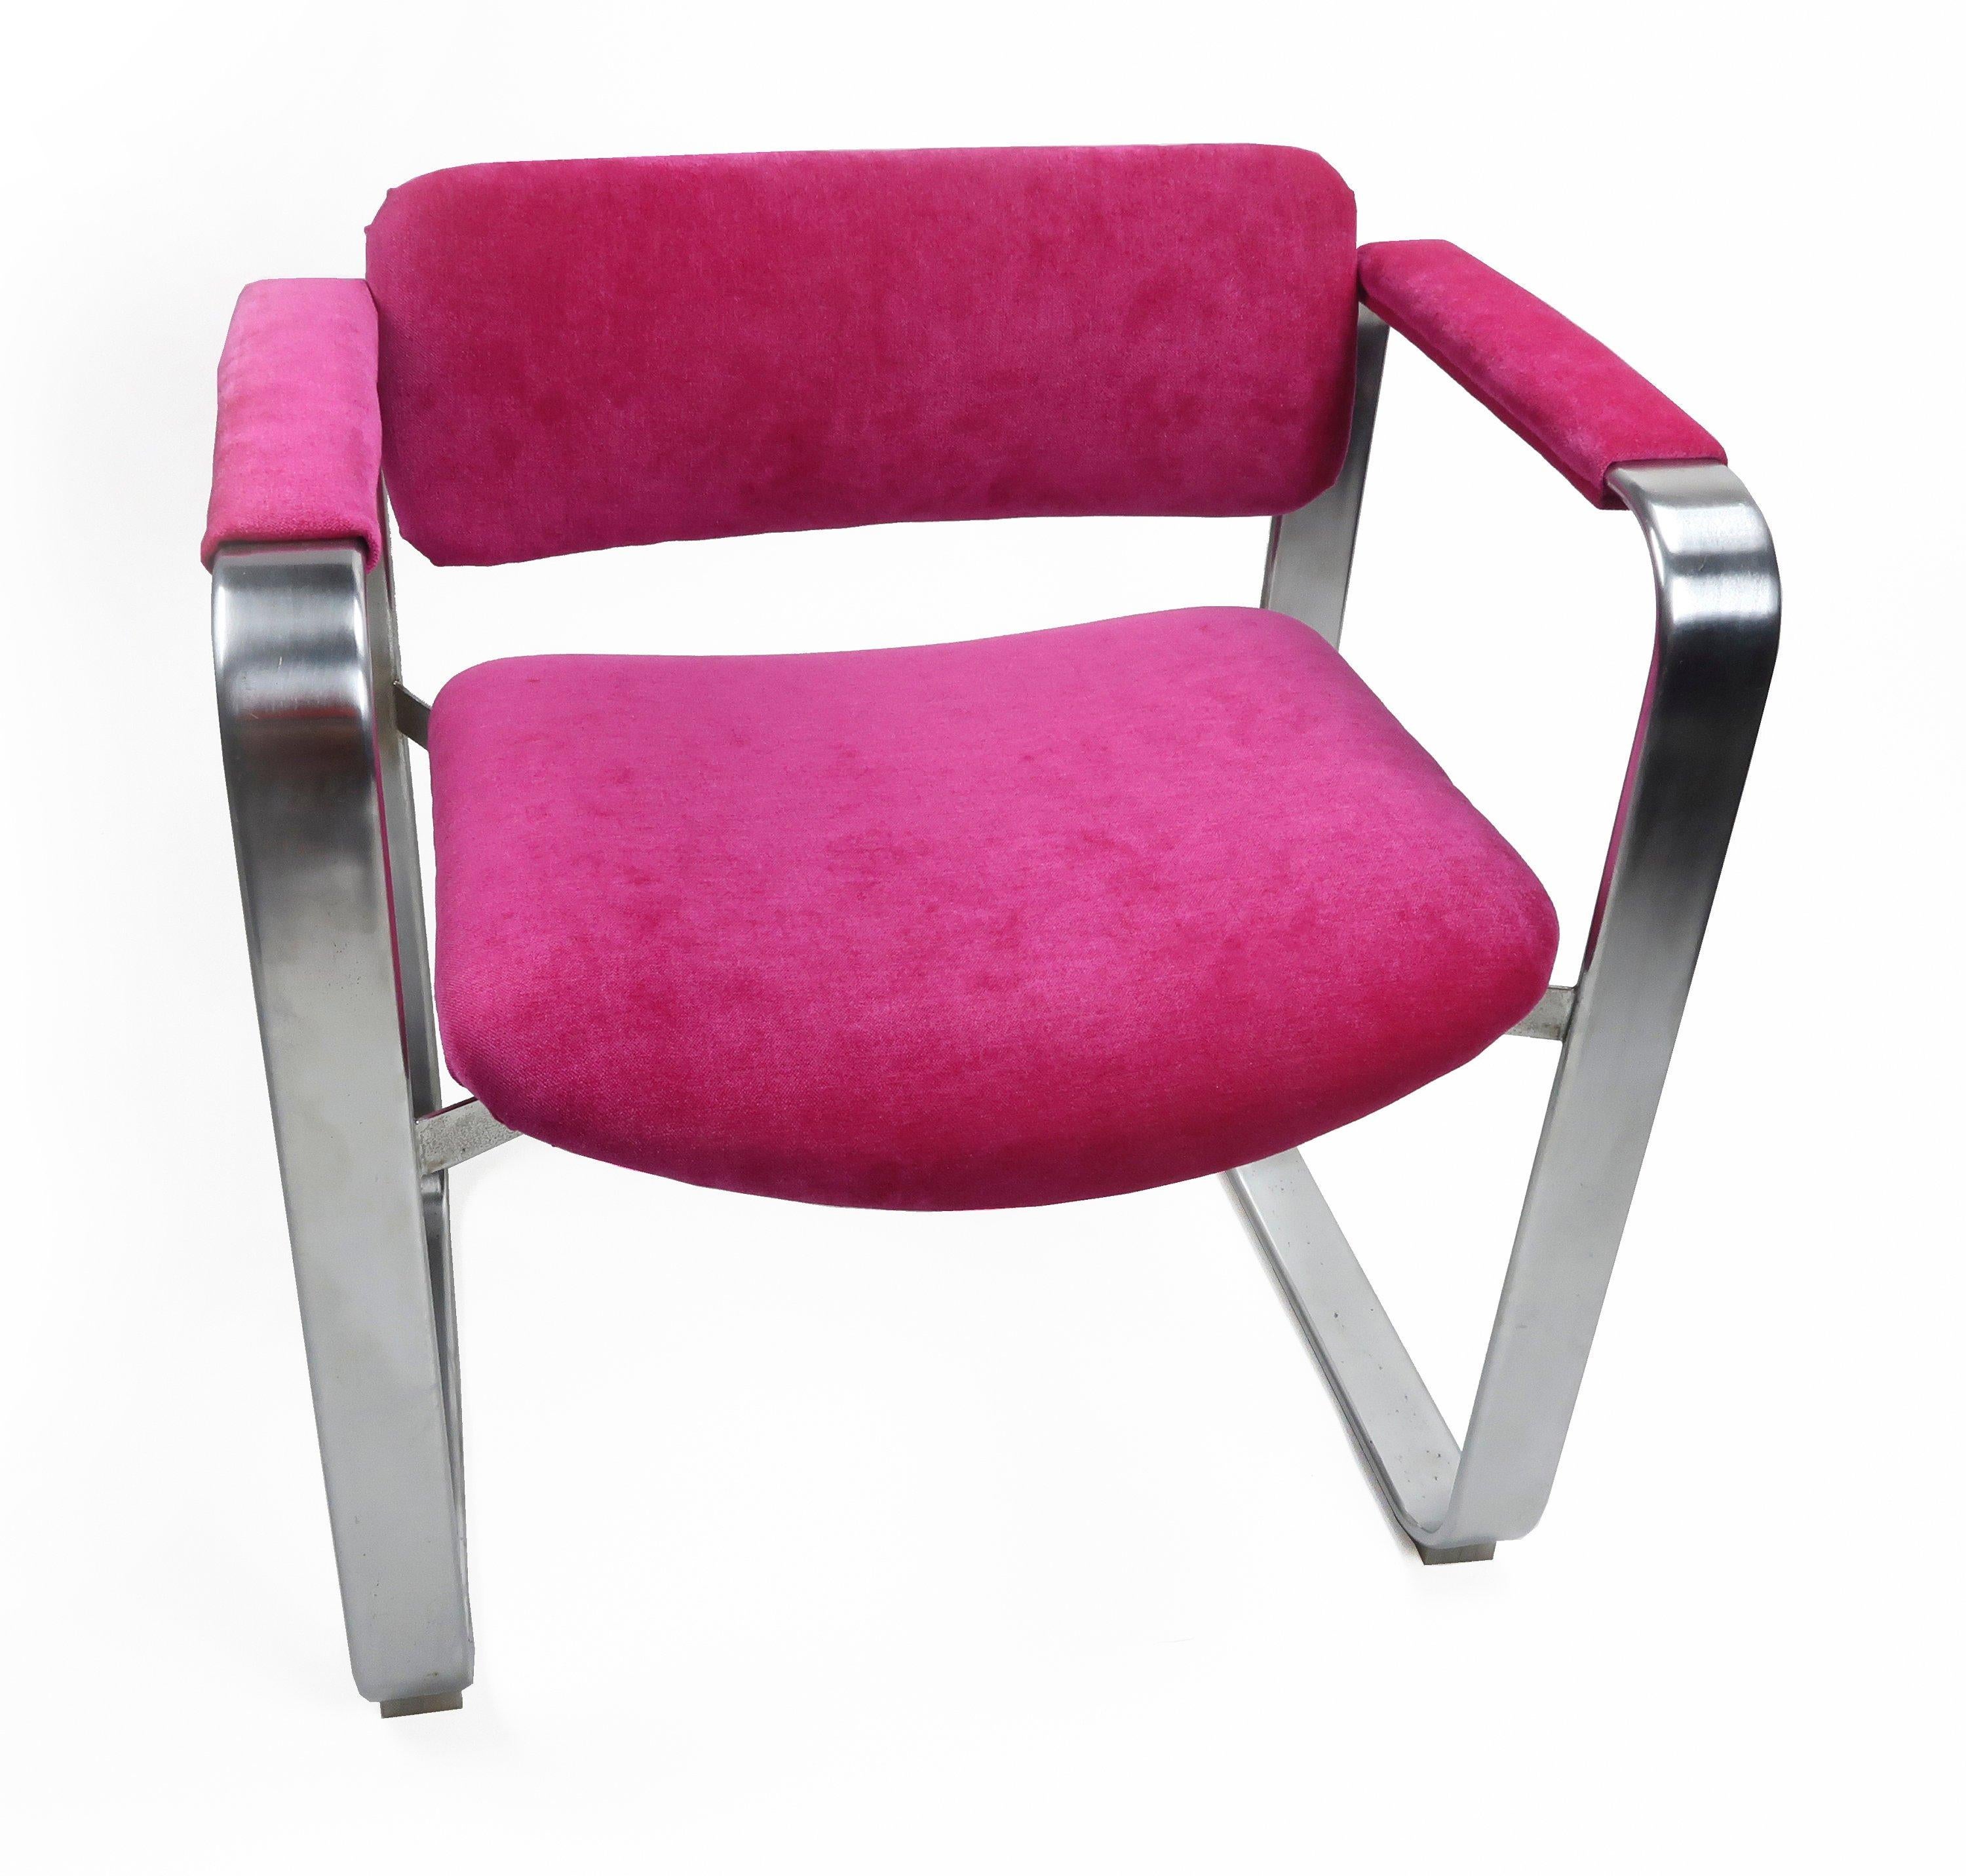 Italian Executive Armchair by Eero Aarnio for Mobel Italia, '1968' For Sale